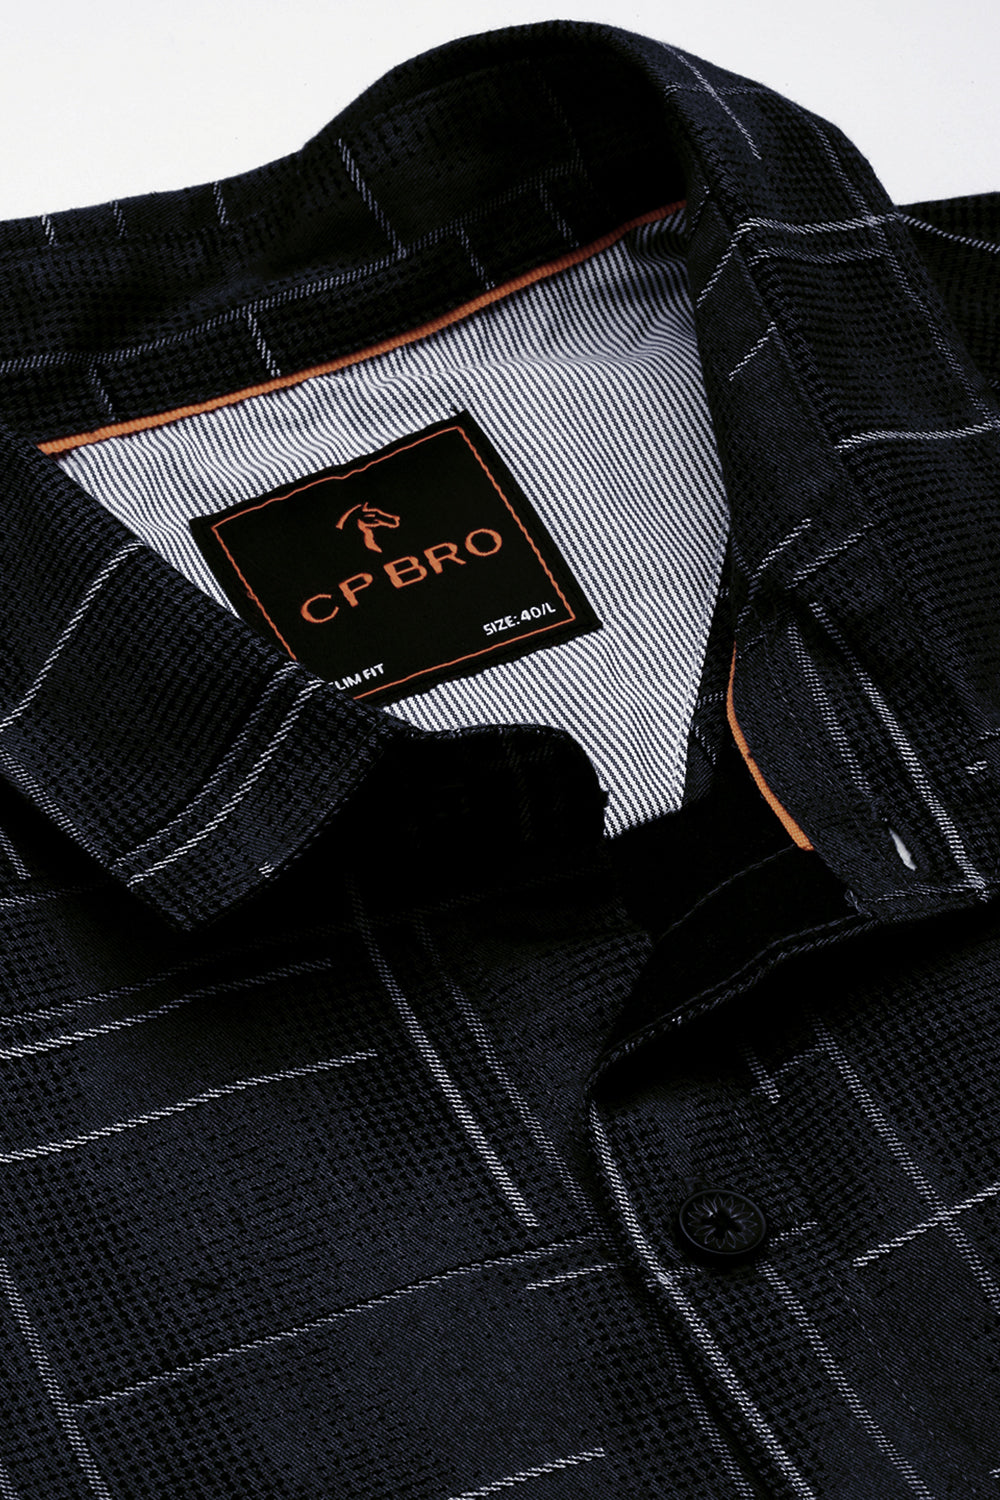 CP BRO Men's Cotton Half Sleeve Printed Slim Fit Polo Neck Black Color Woven Shirt | Sbo1-09 B